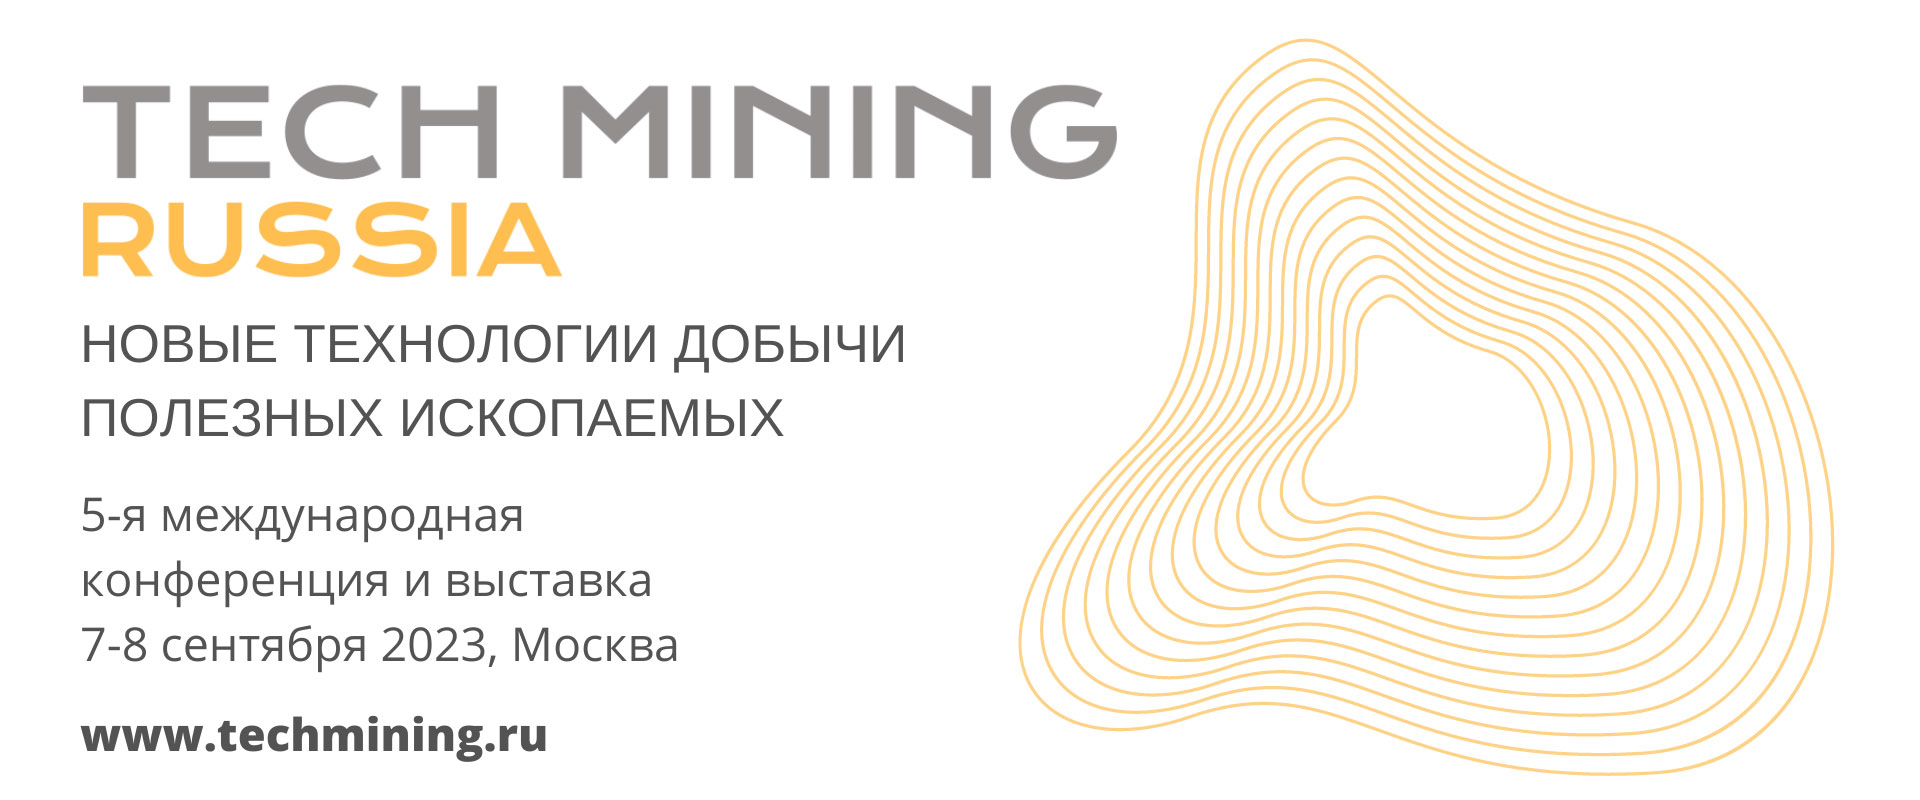 Международная конференция Tech Mining Russia 2023